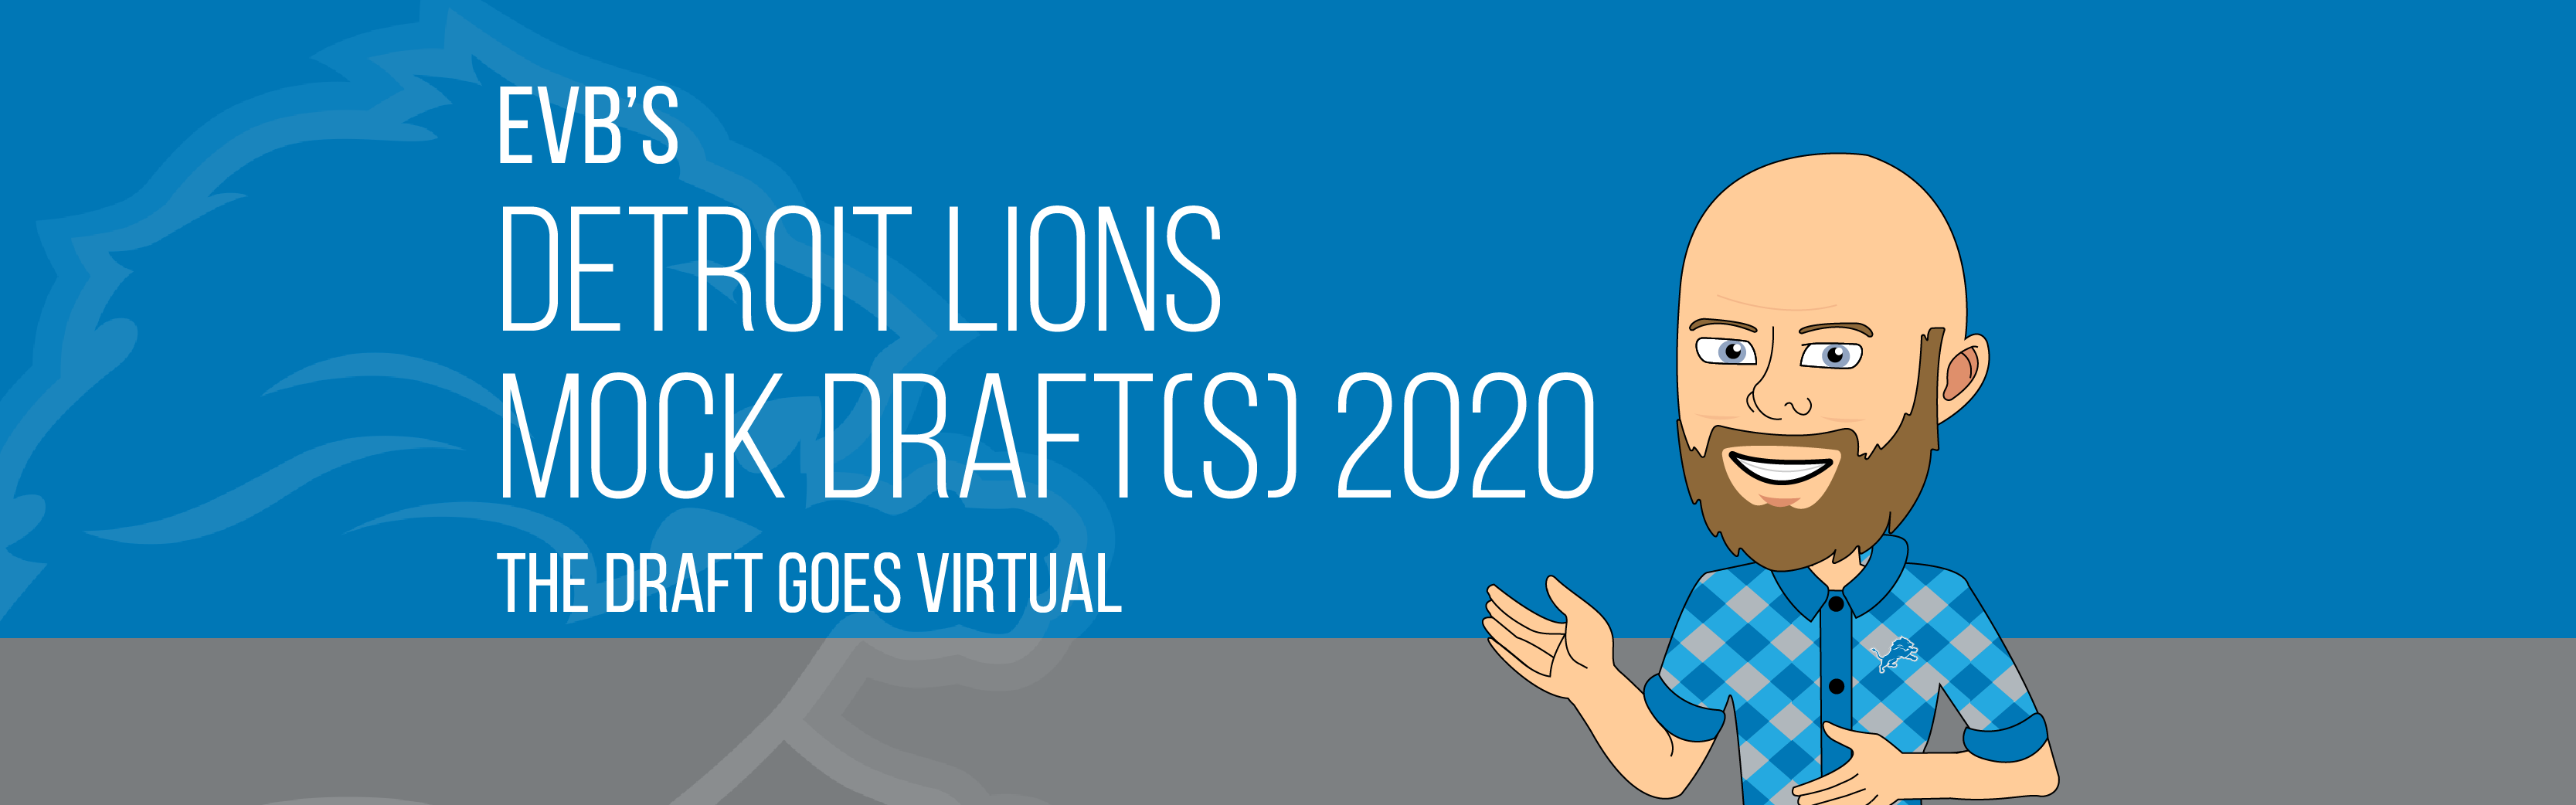 EVB's Detroit Lions Mock Draft 2020